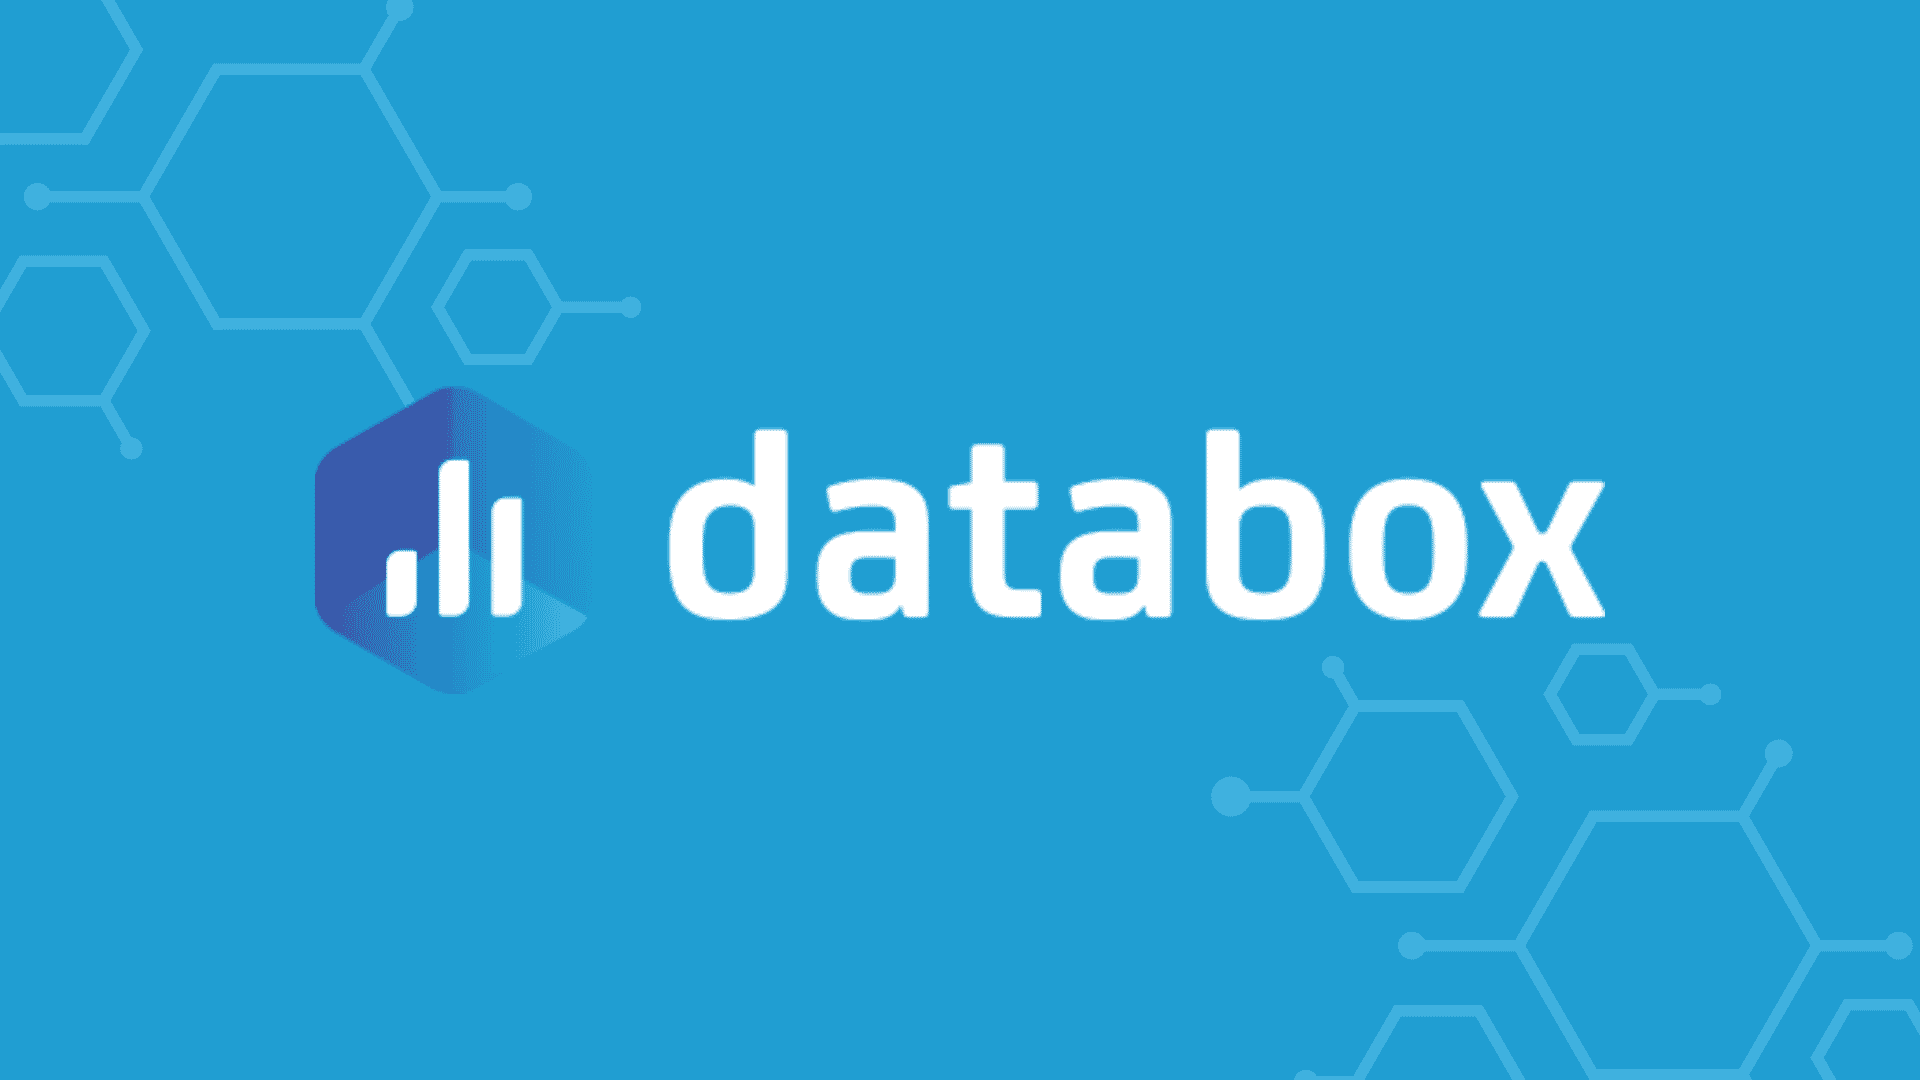 Databox Logo